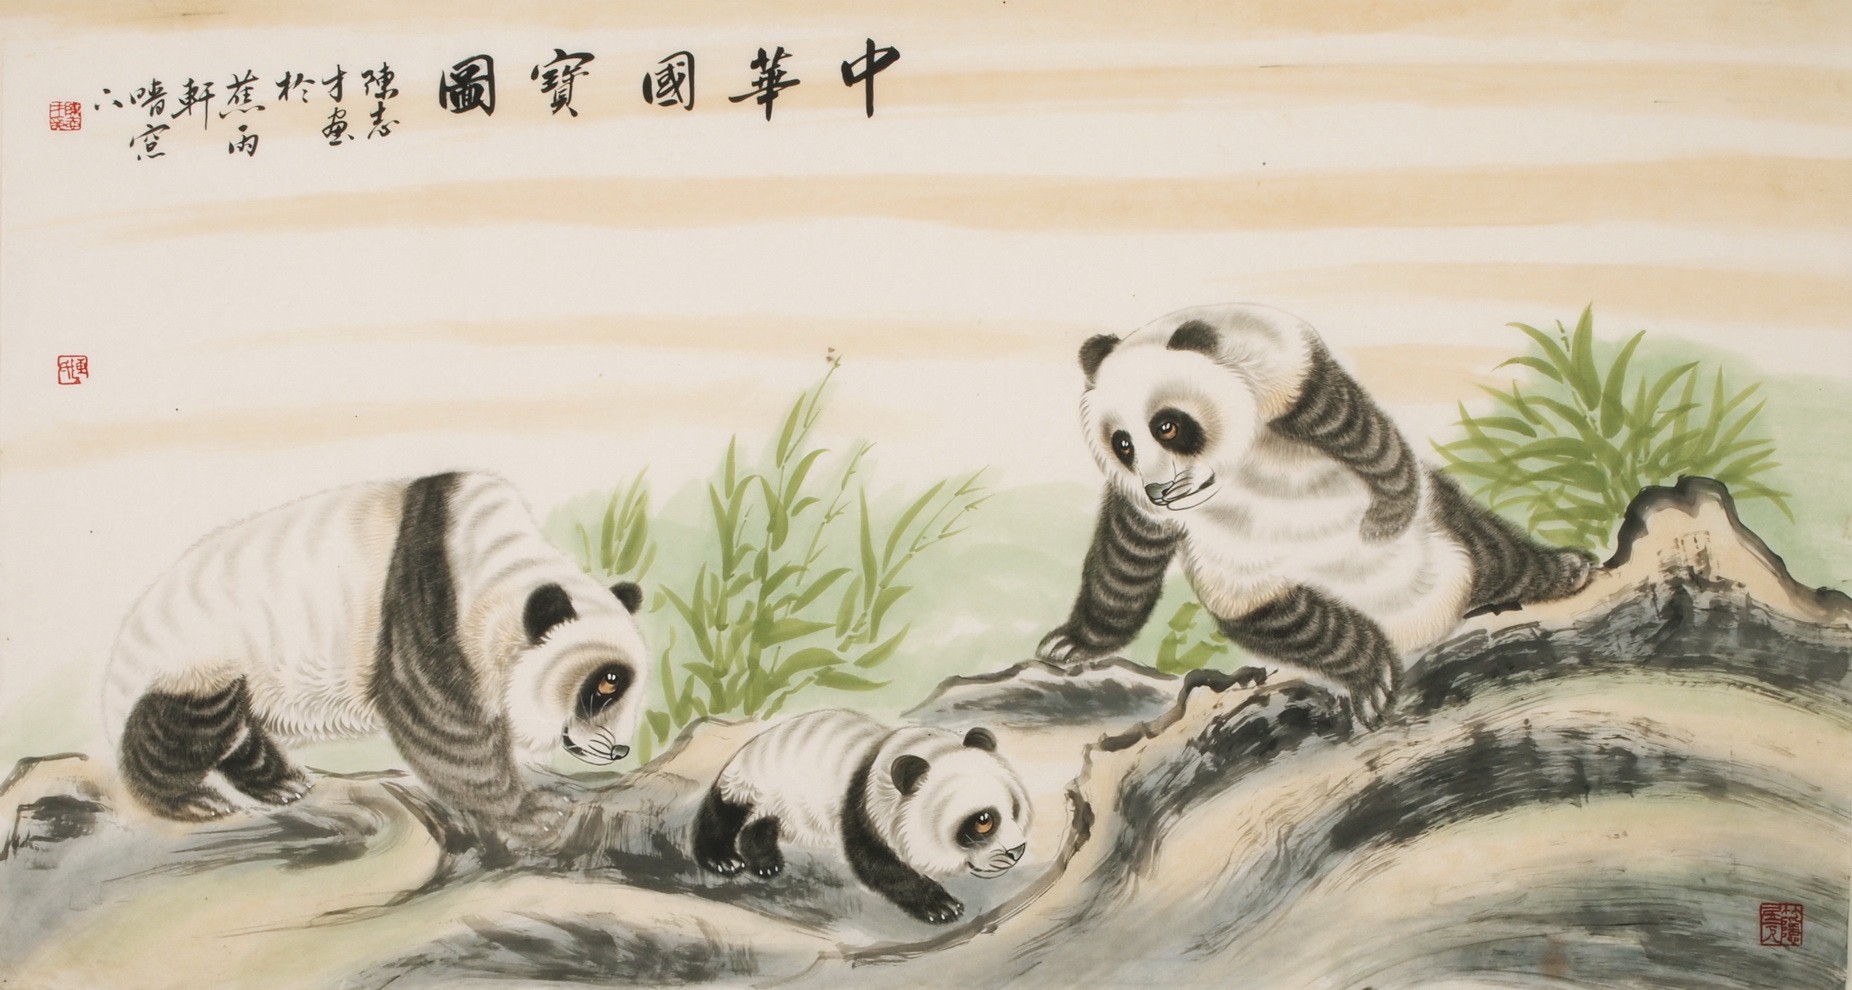 Panda - CNAG001959